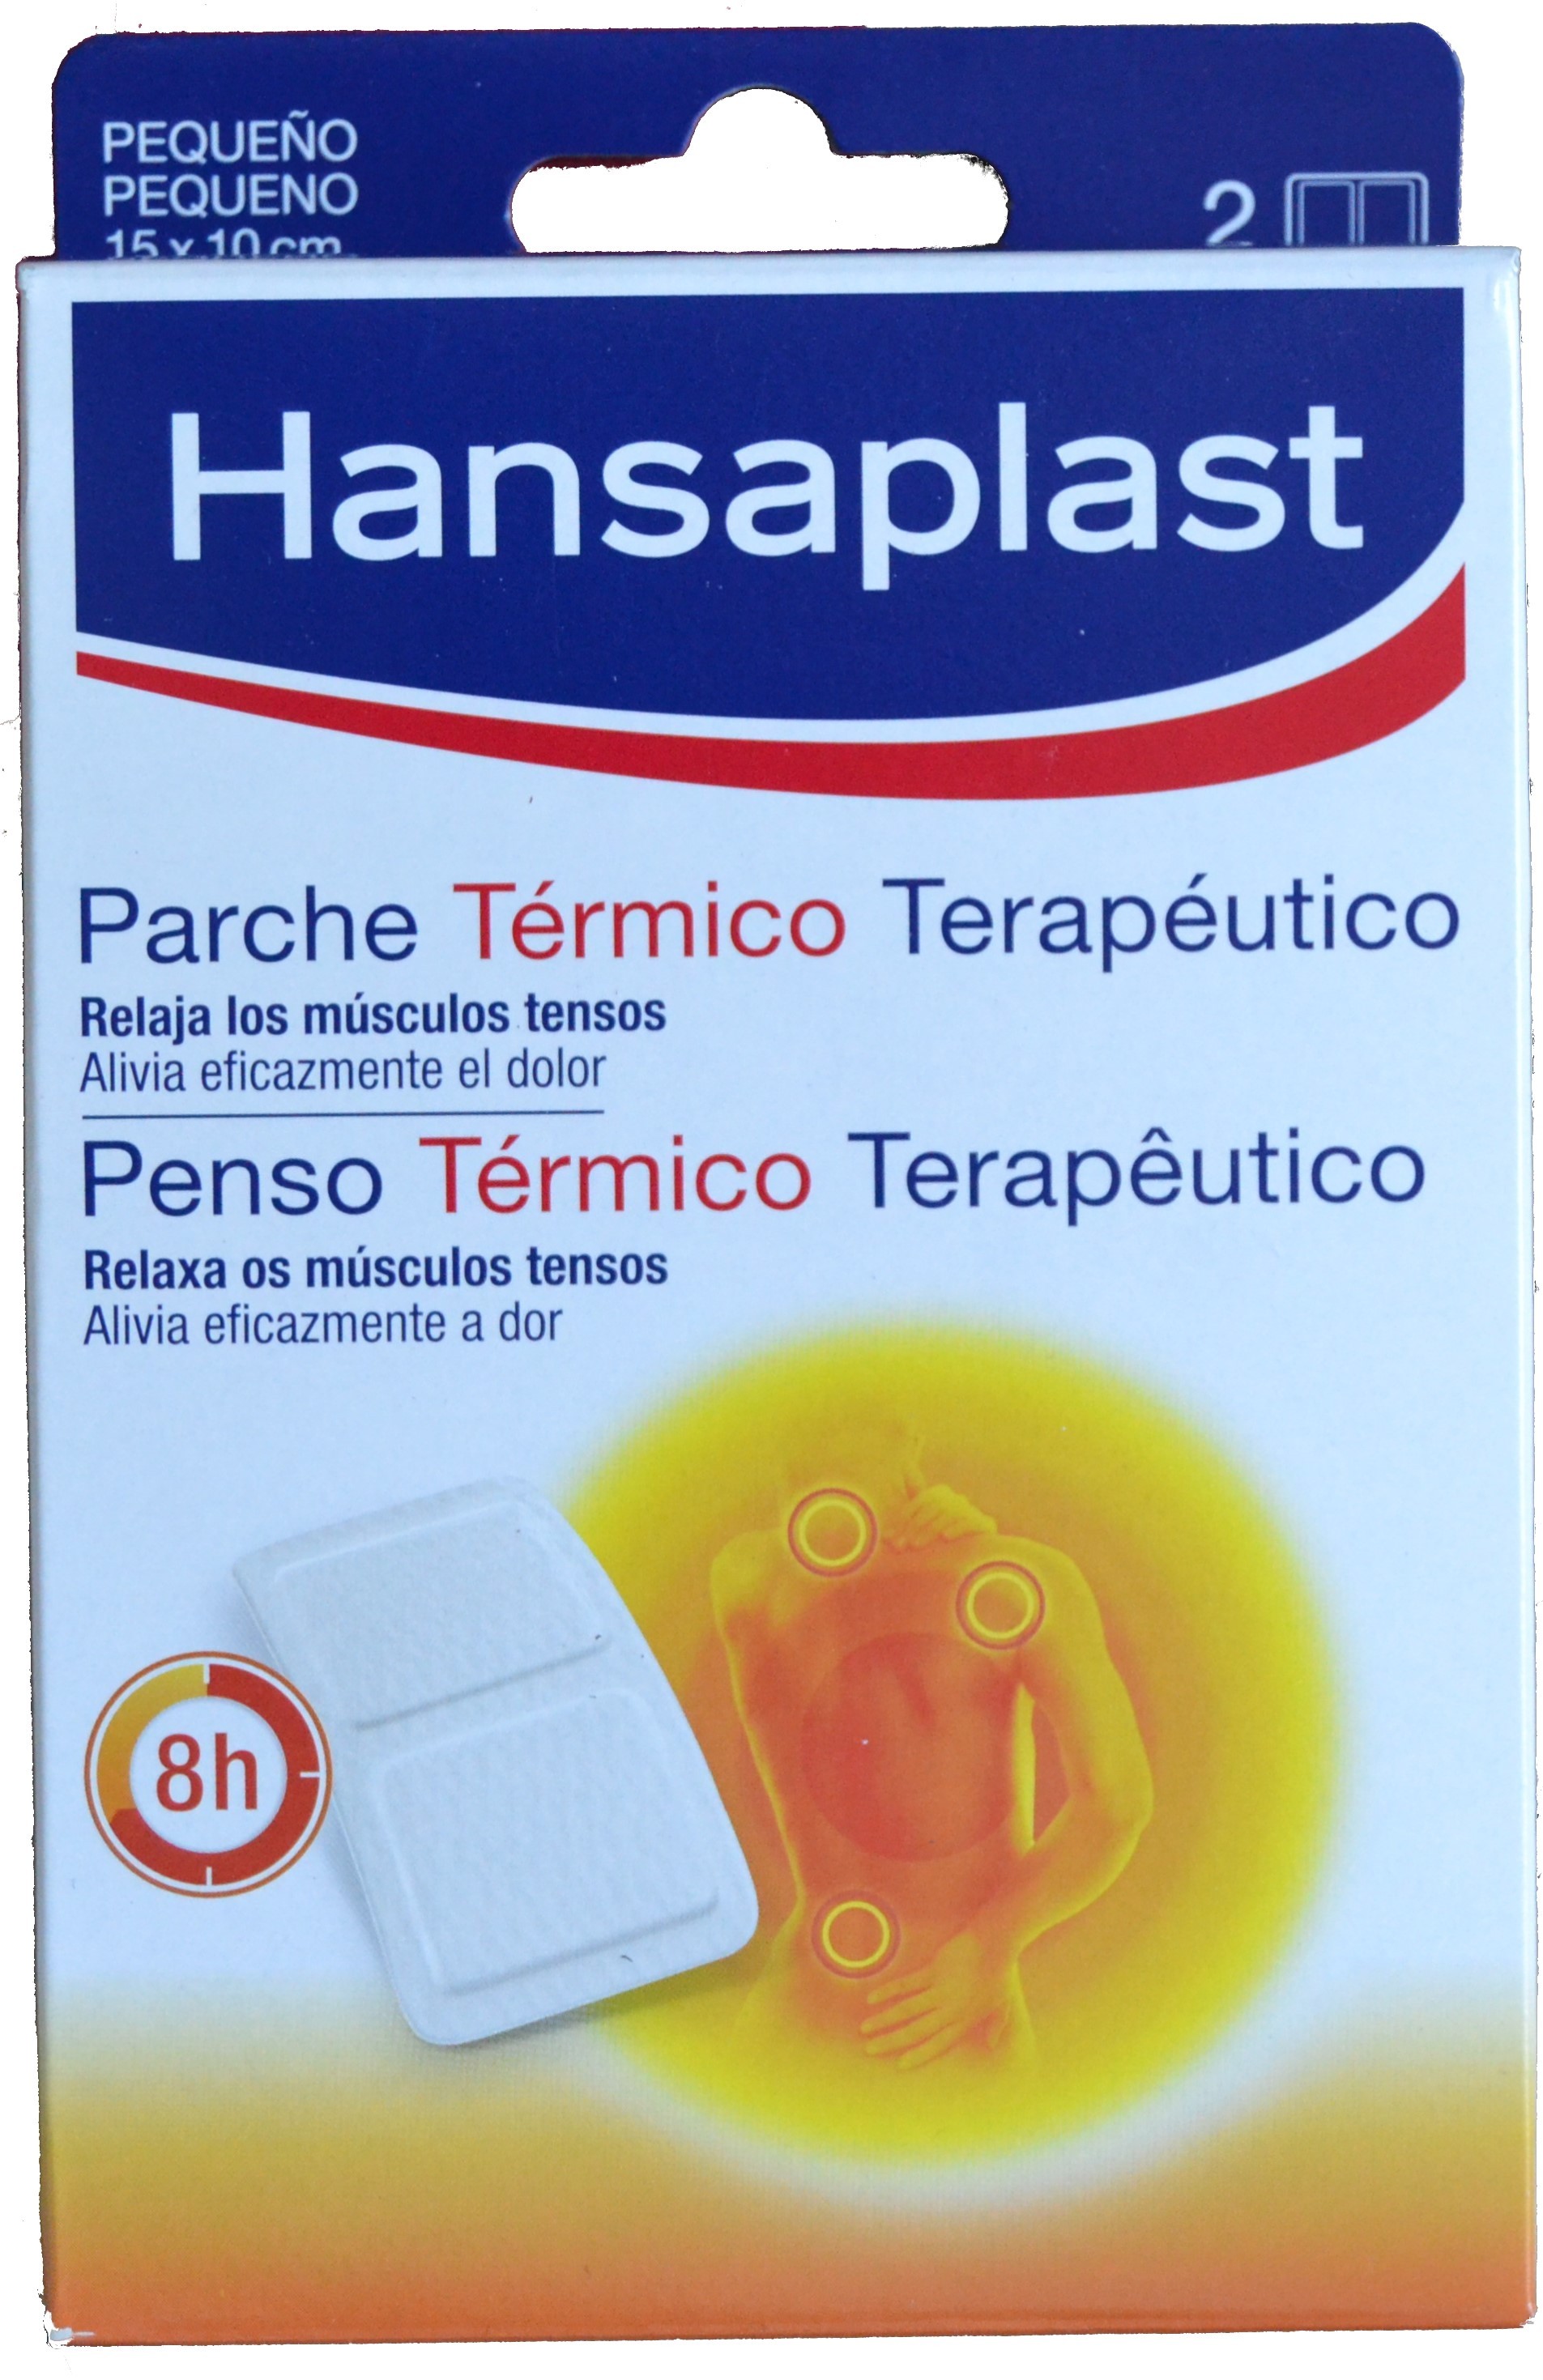 PARCHE TÉRMICO TERAPÉUTICO HANSAPLAST - Farmacia Anna Riba